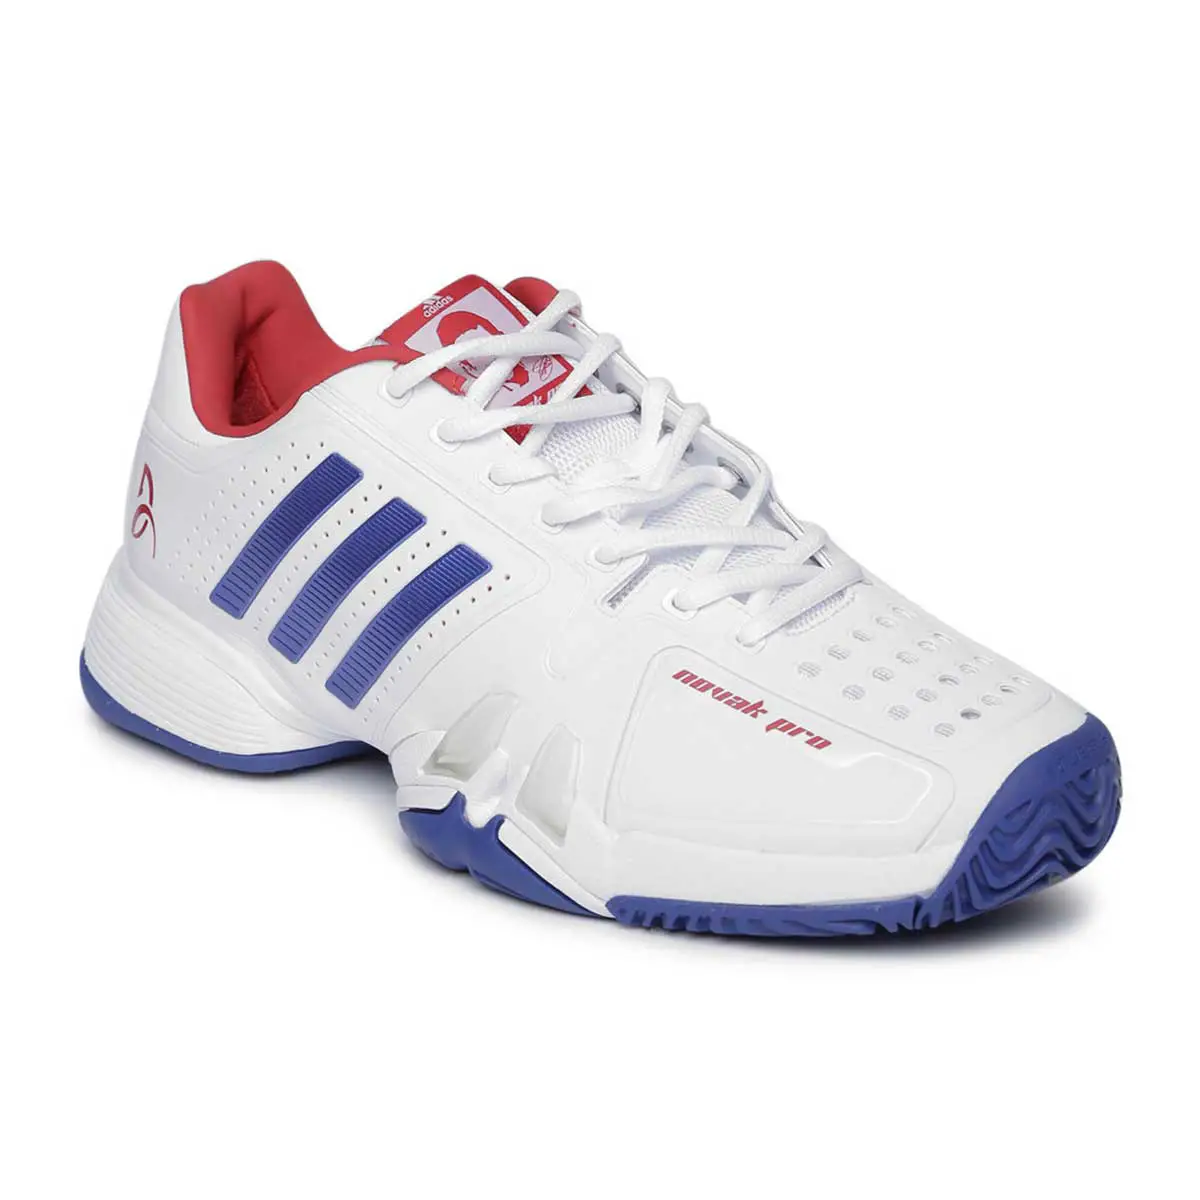 Buy Adidas Novak Pro Tennis Shoes (White/Royal/Scarlet) Online